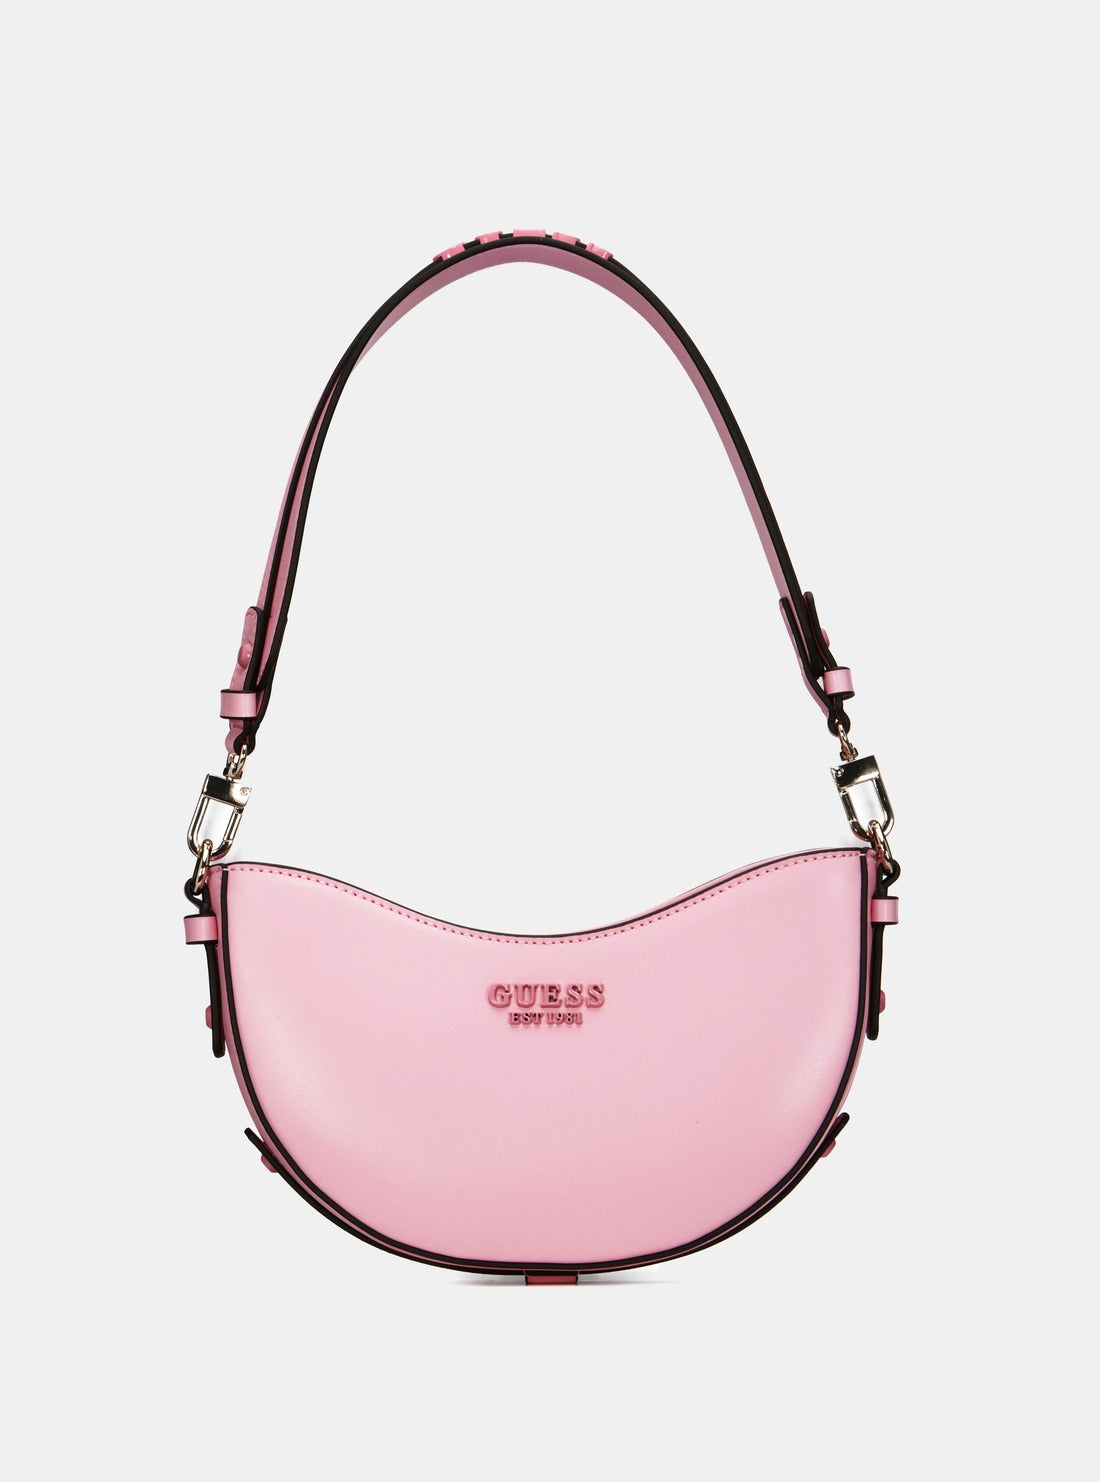 GUESS Pink Sarita Shoulder Bag front view